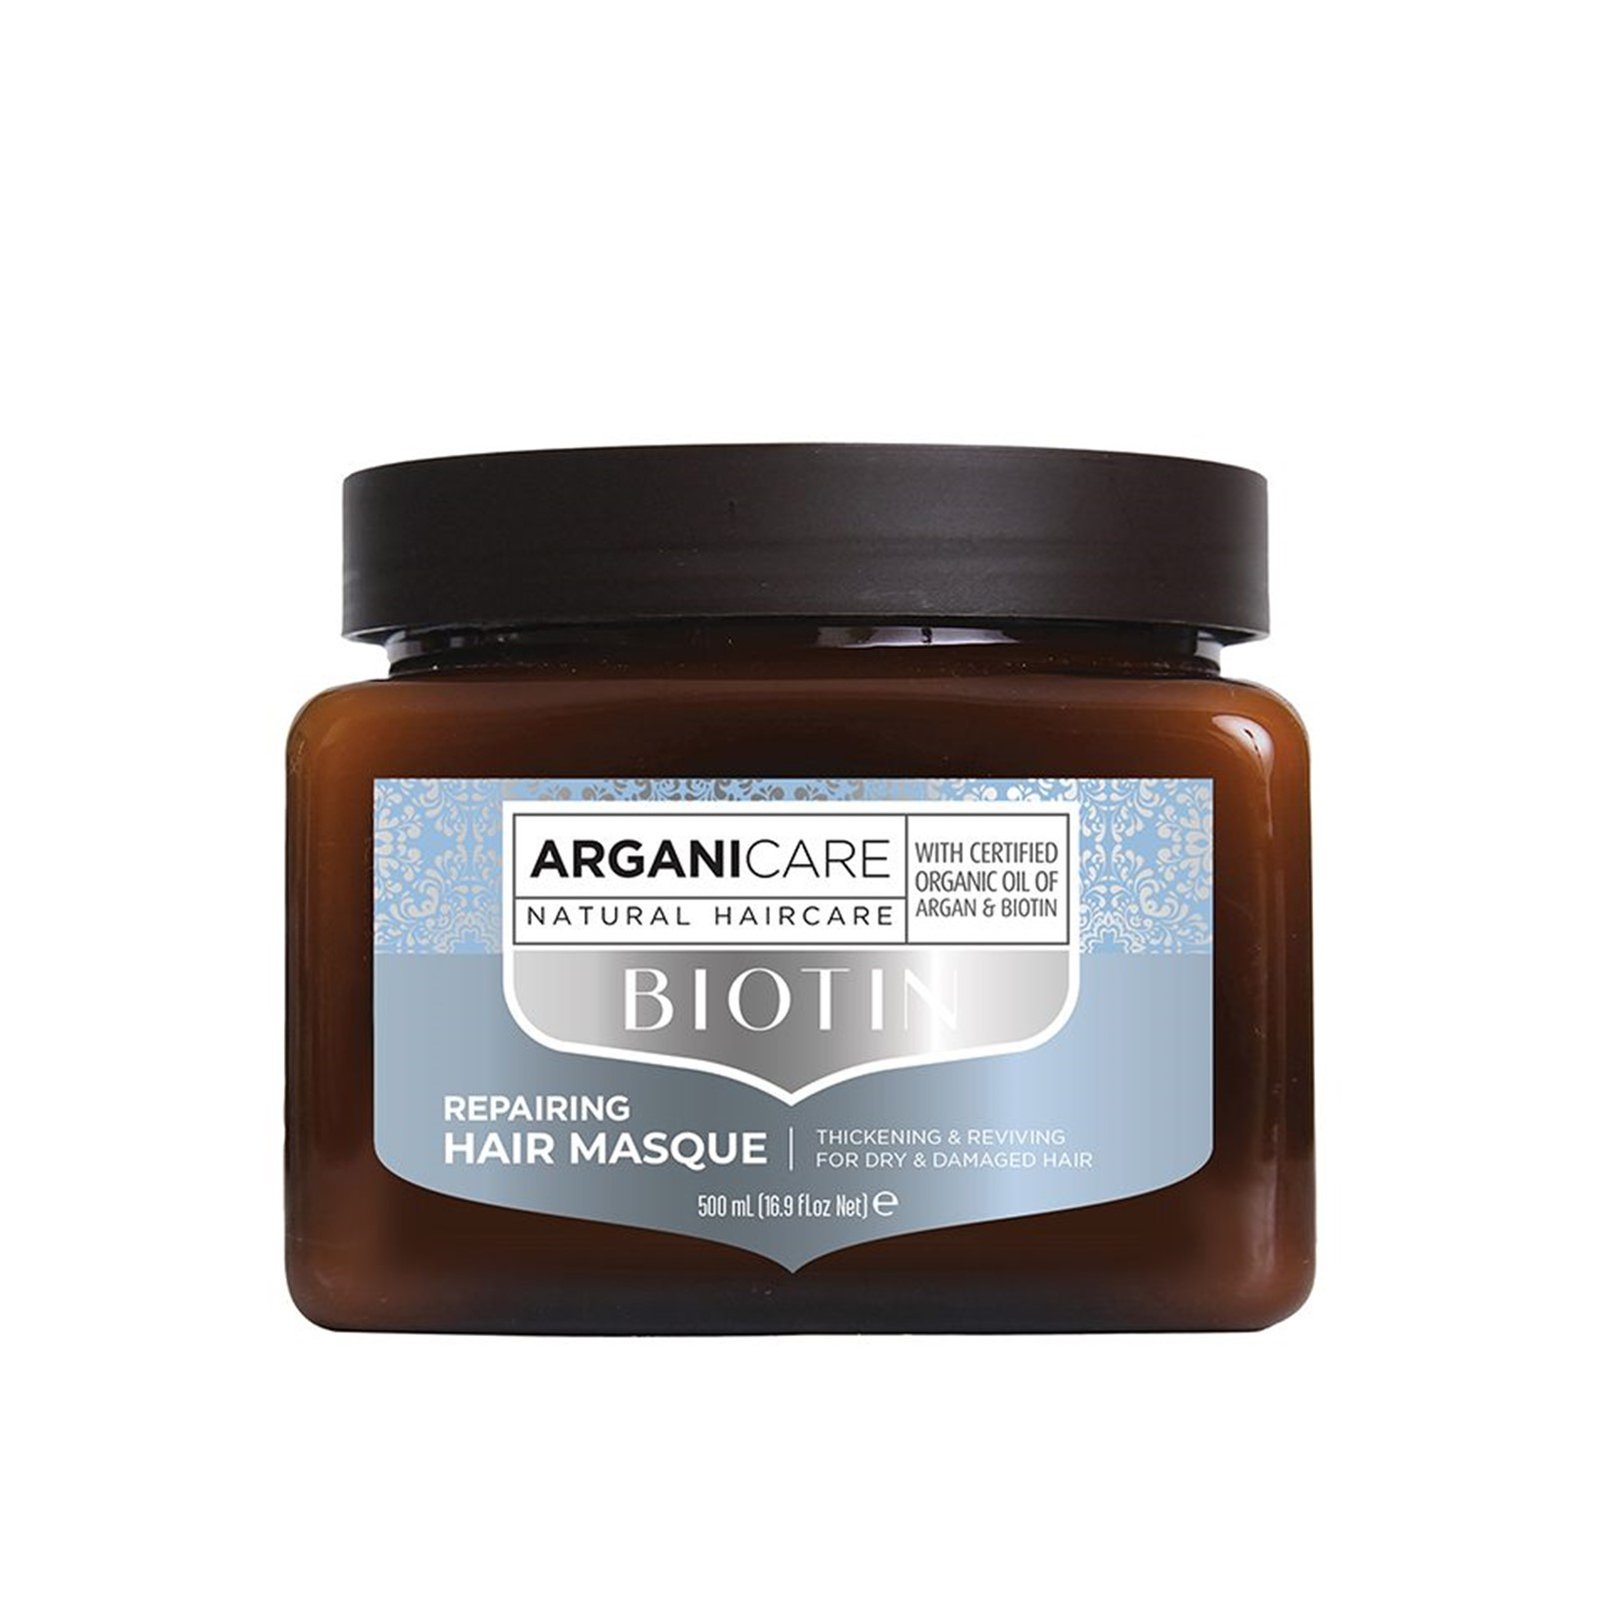 Arganicare Biotin Repairing Hair Masque 500ml (16.9 fl oz)